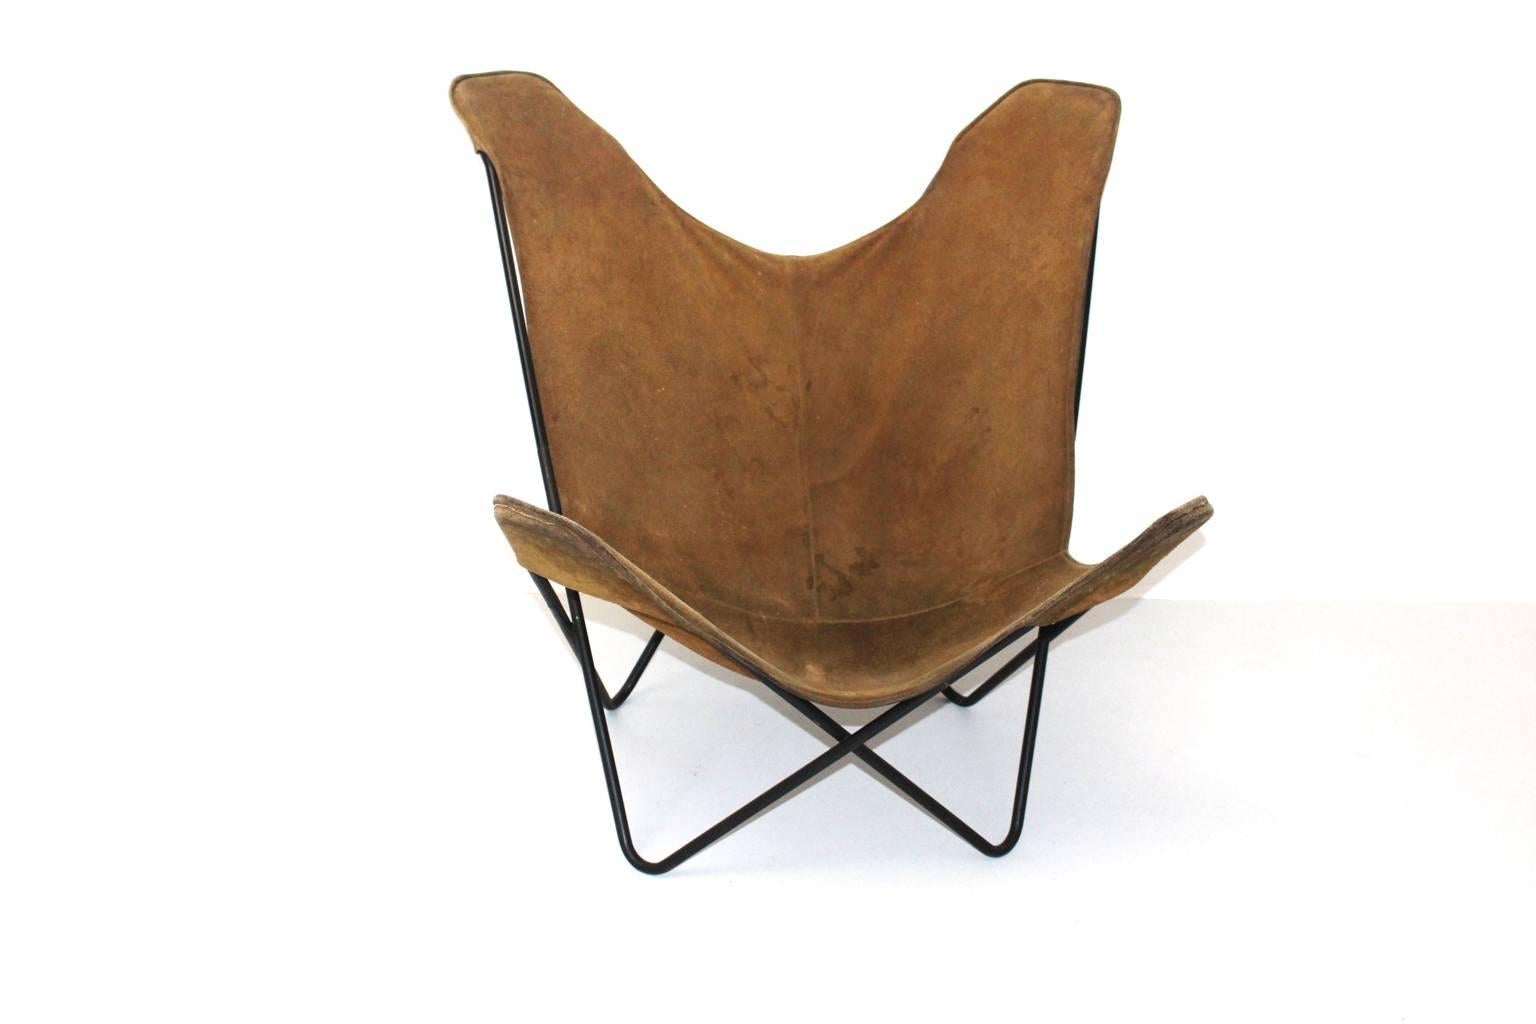 20th Century Brown Butterfly Chair by Jorge Ferrari-Hardoy Juan Kurchann Antonio Bonet, 1938